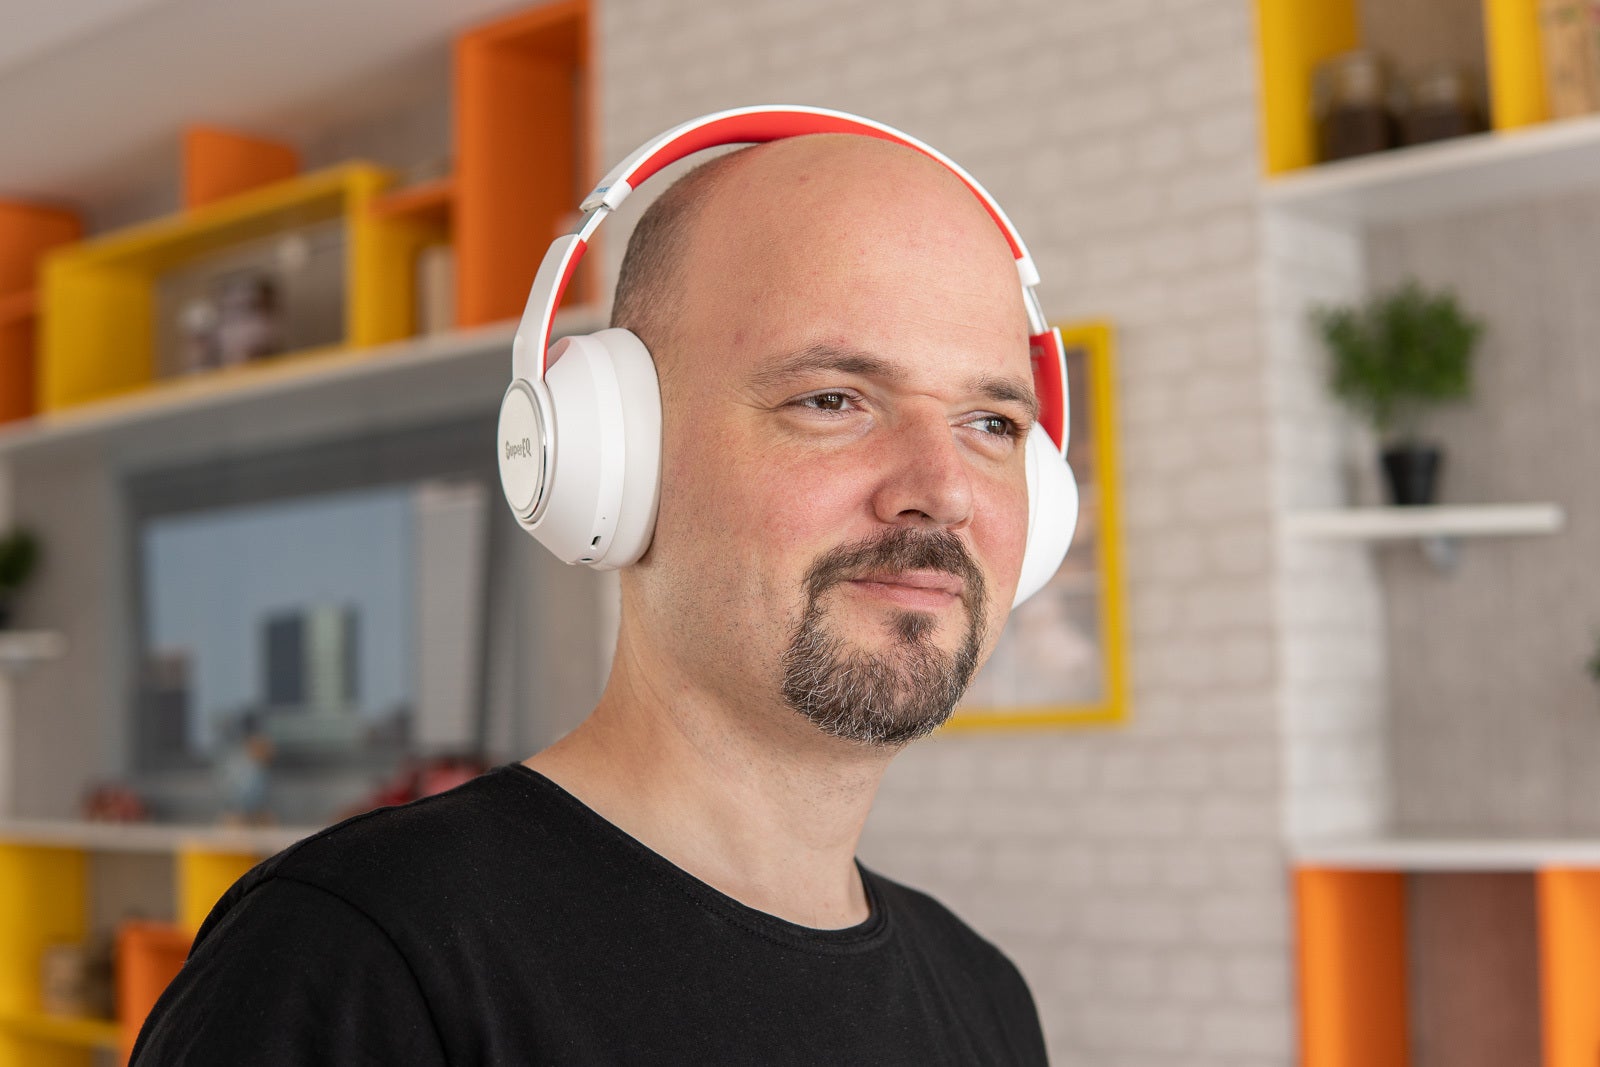 SuperEQ headphones: affordable active noise-cancelation and fresh style